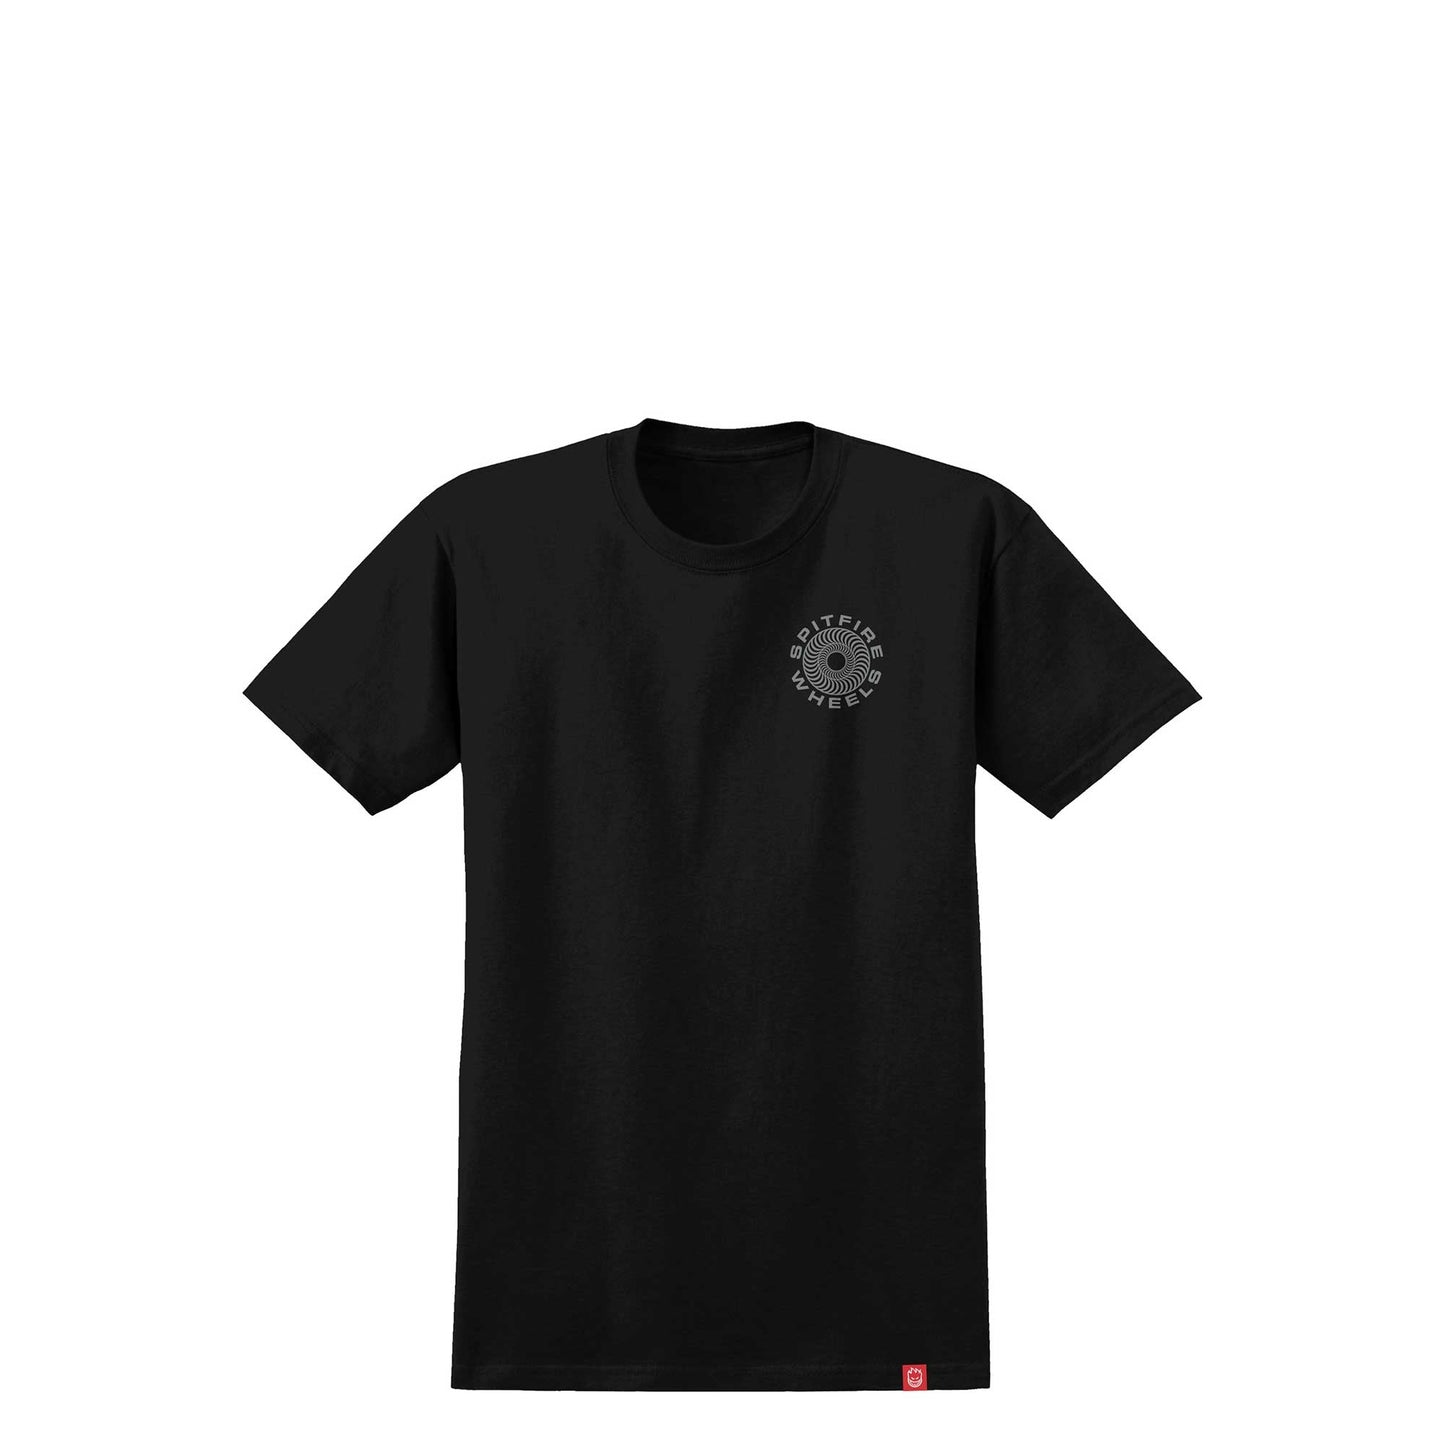 Spitfire Classic 87' Swirl S/S T-Shirt, black w/ silver fleck prints - Tiki Room Skateboards - 1